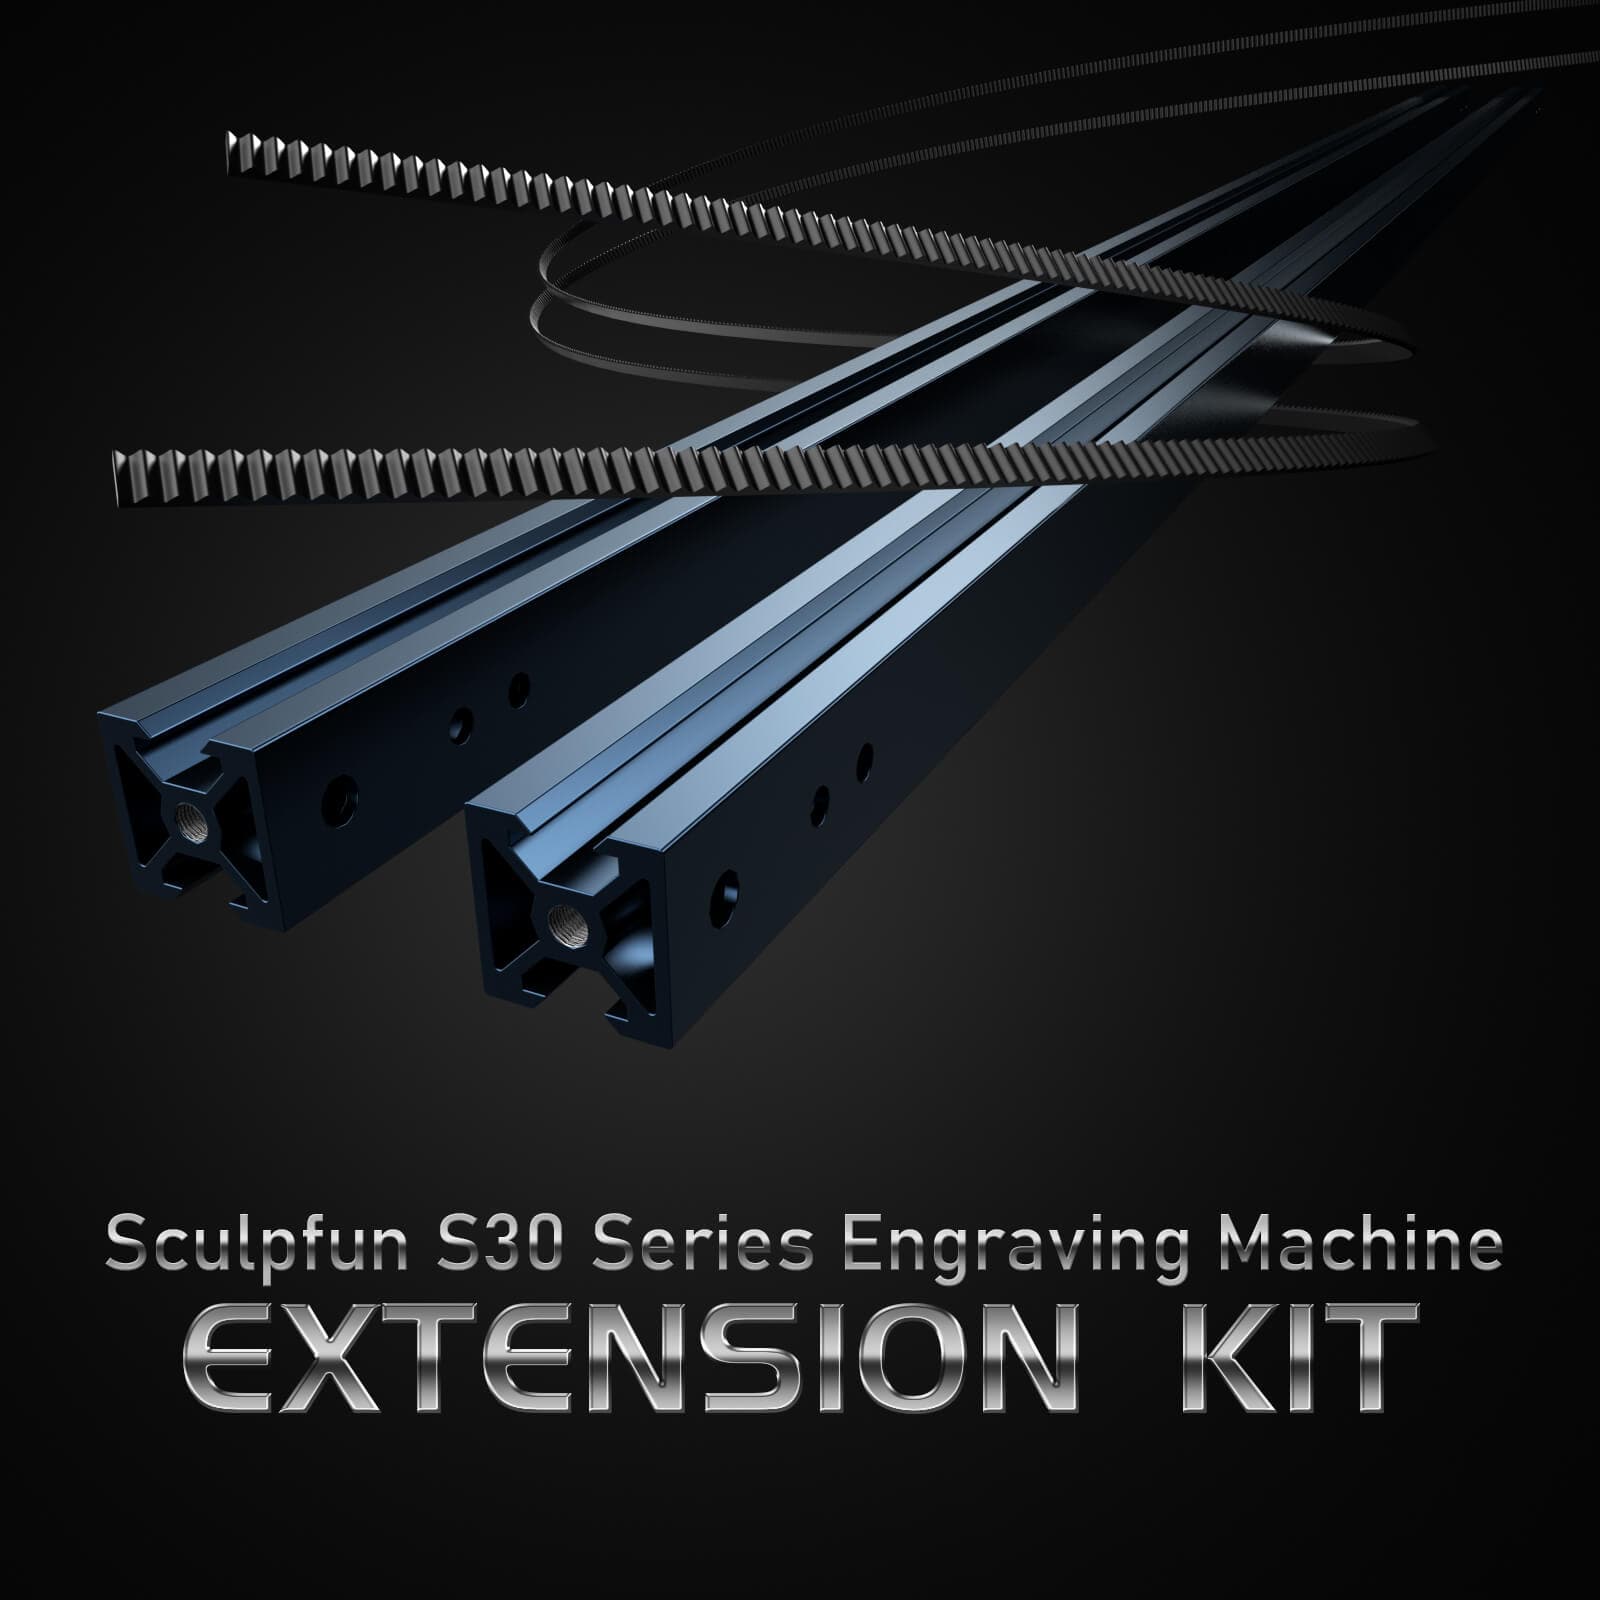 SCULPFUN S30 Series engraving area expansion kit